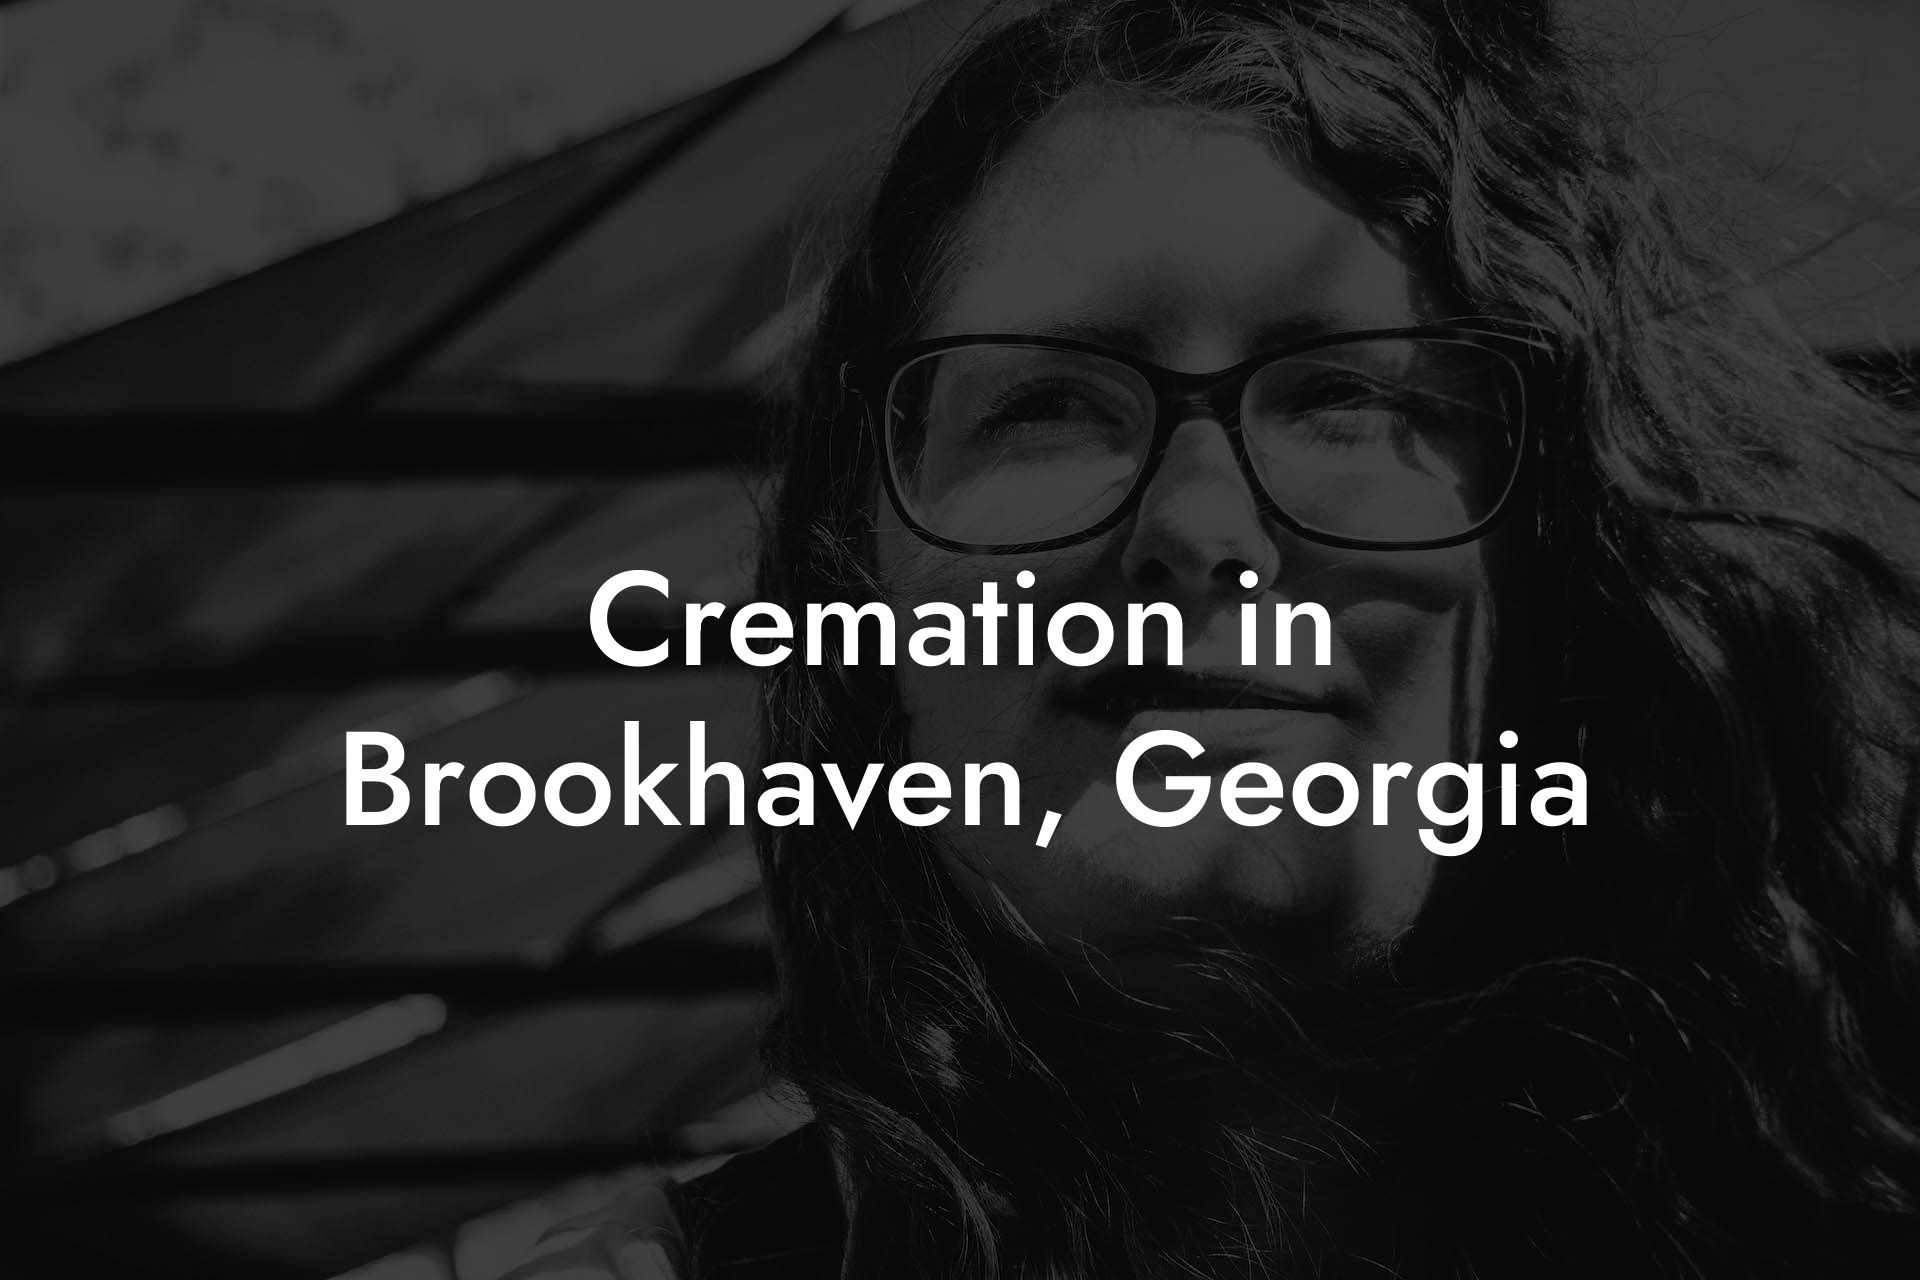 Cremation in Brookhaven, Georgia